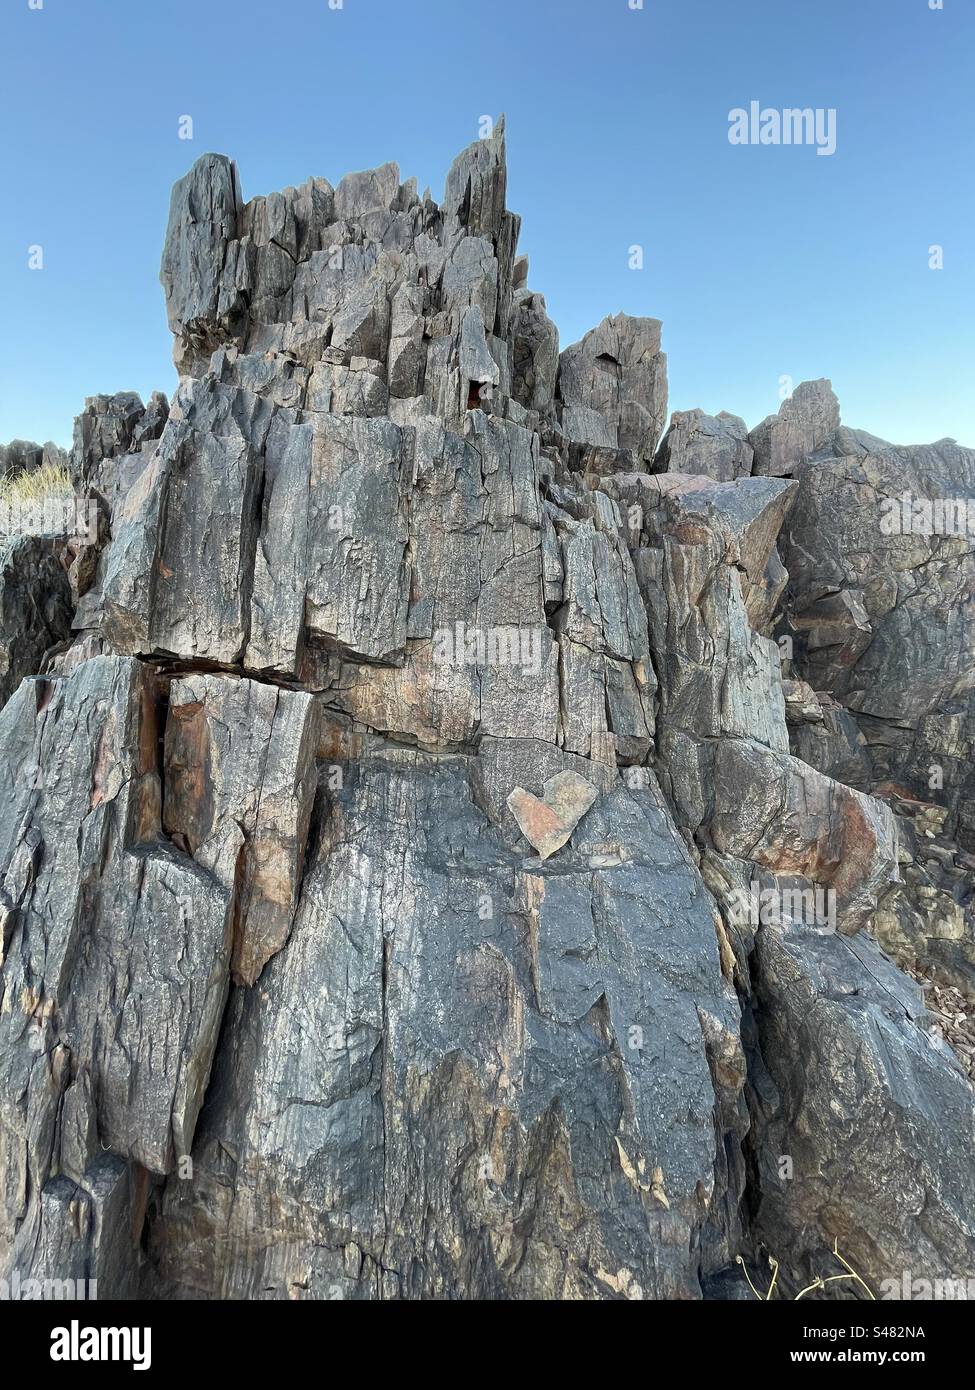 Natural Stone tower, rock heart, brilliant blue sky, Phoenix Mountains Preserve, Arizona Stock Photo